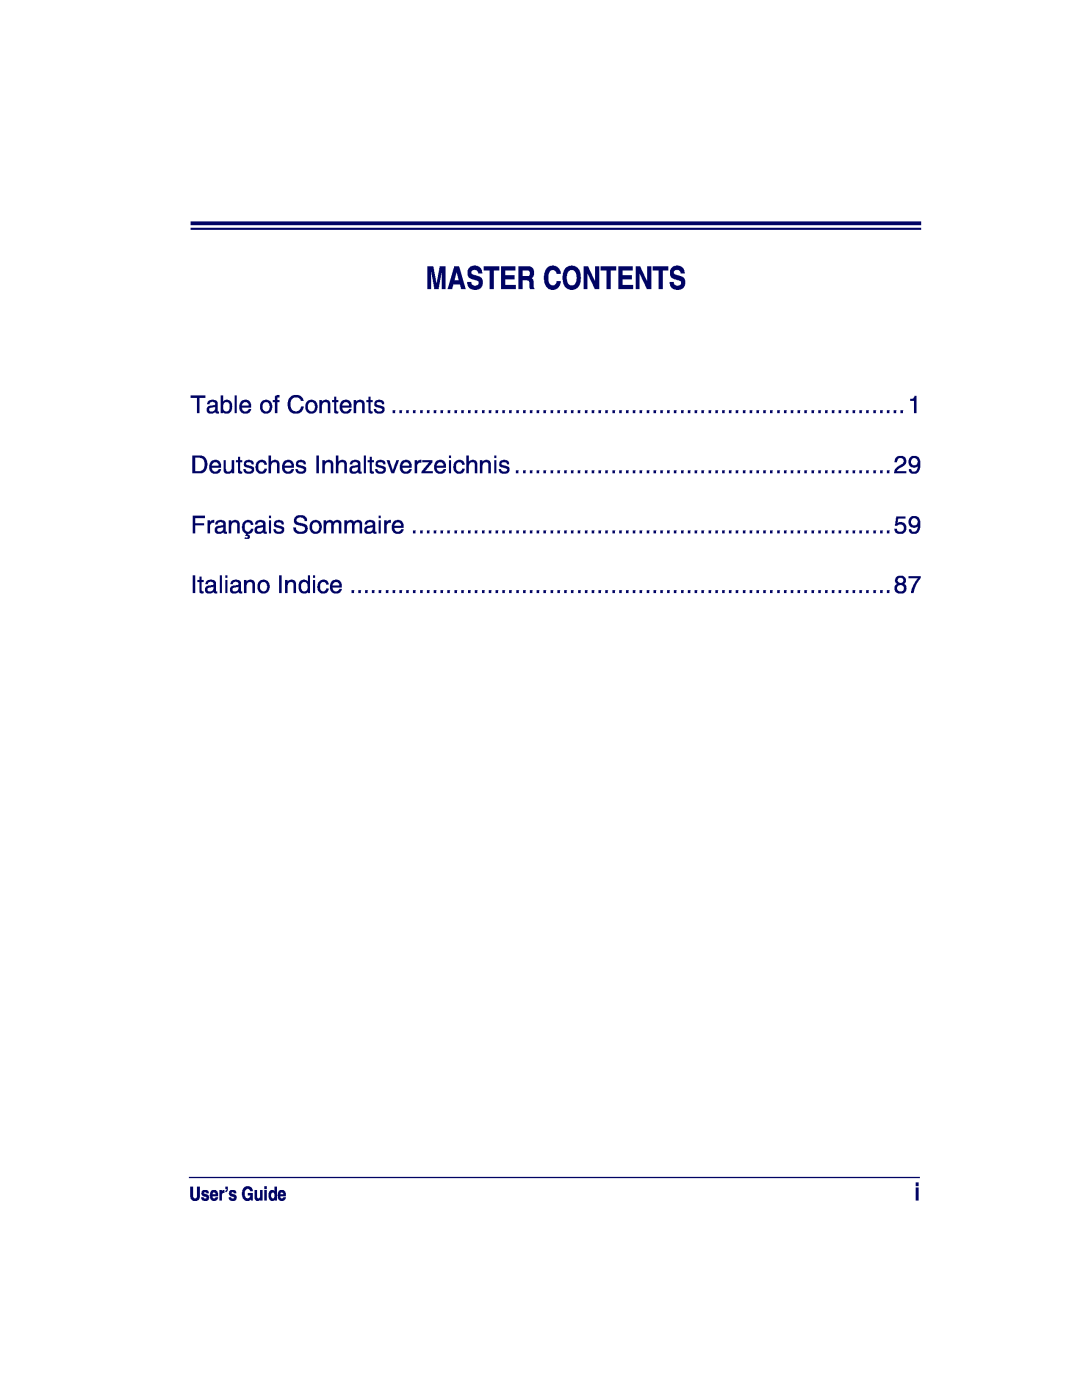 Datalogic Scanning HD User’s Guide, Master Contents, Table of Contents, Deutsches Inhaltsverzeichnis, Français Sommaire 